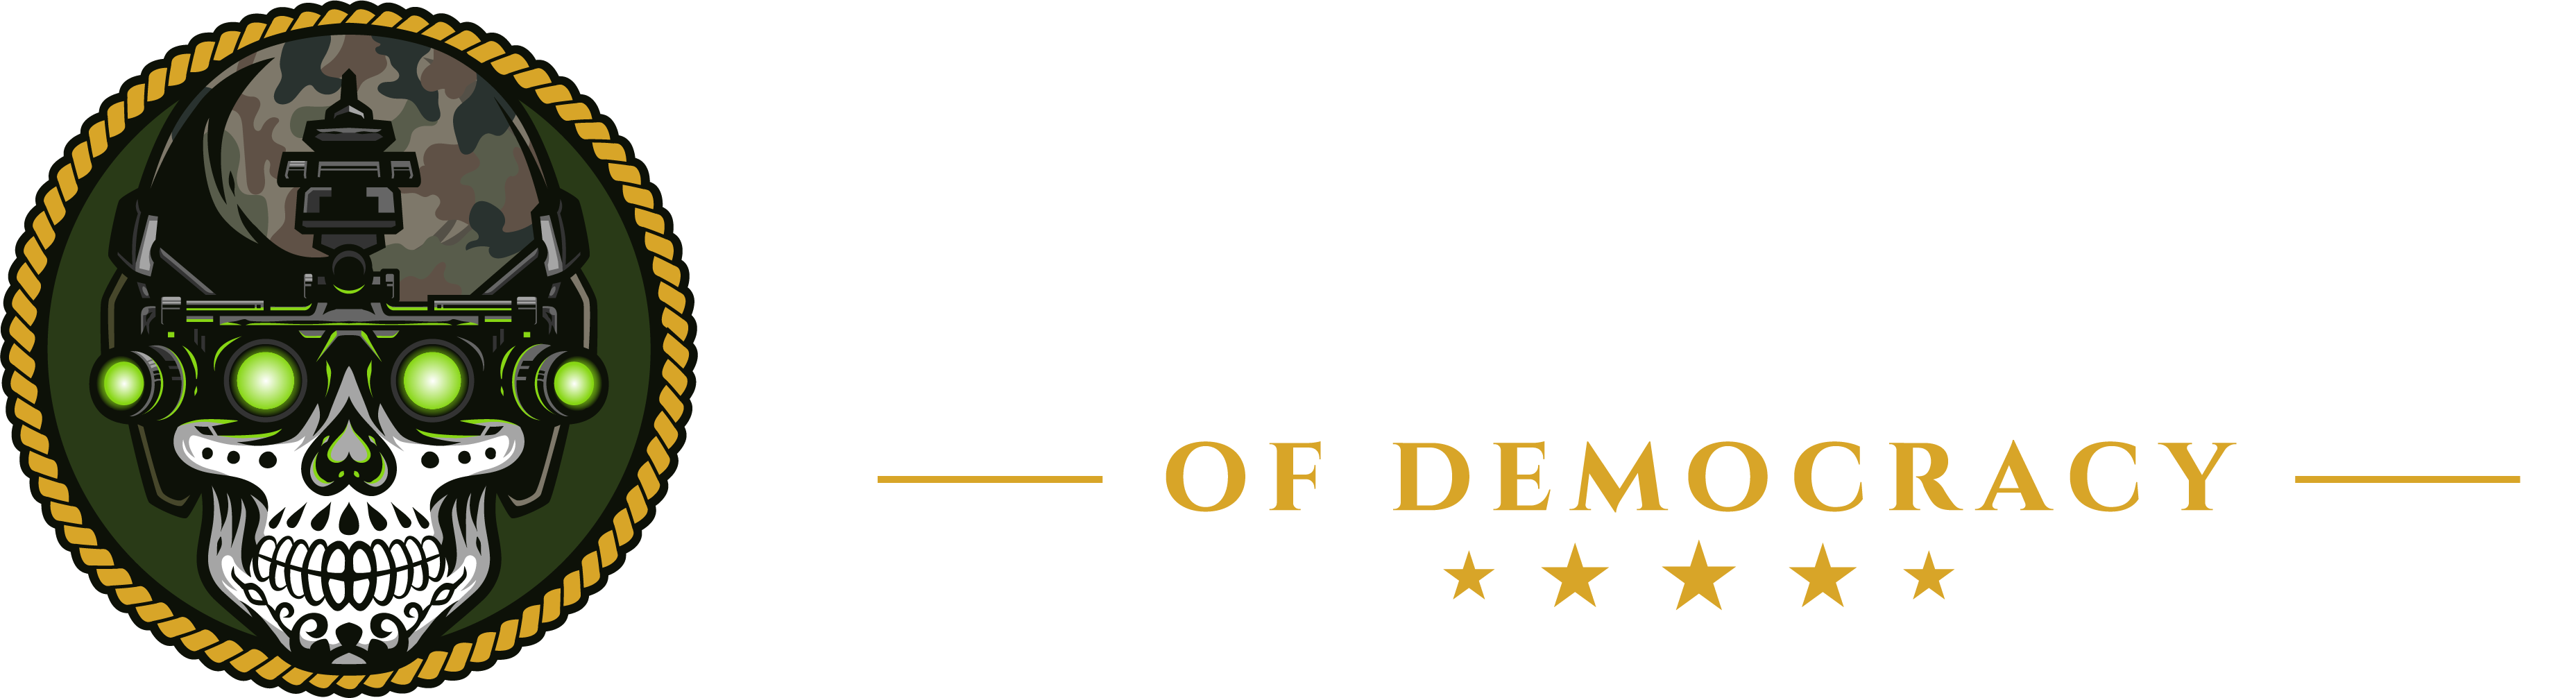 Distributors of Democracy